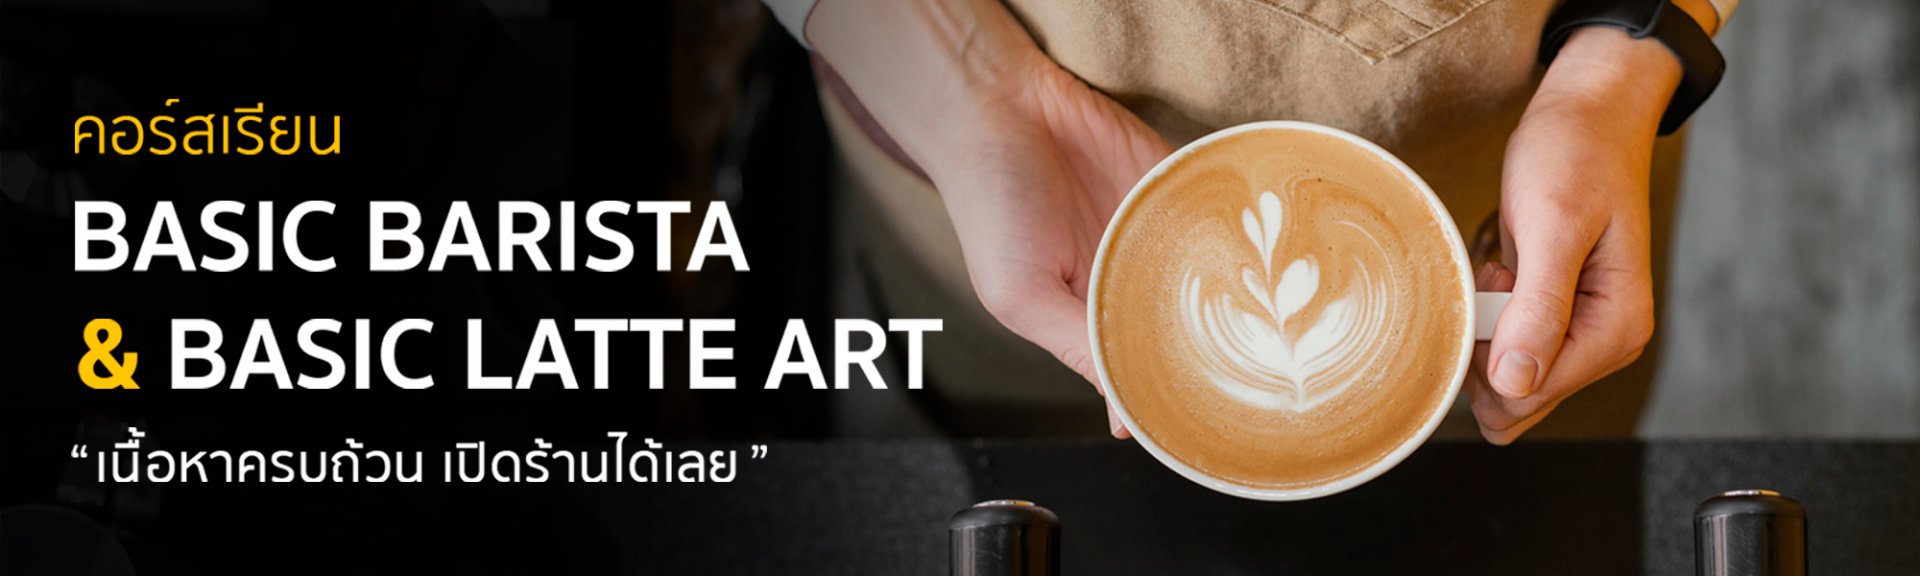 Mistercoffeeshop - คอร์สเรียน Basic Barista and Baasic Latte Art